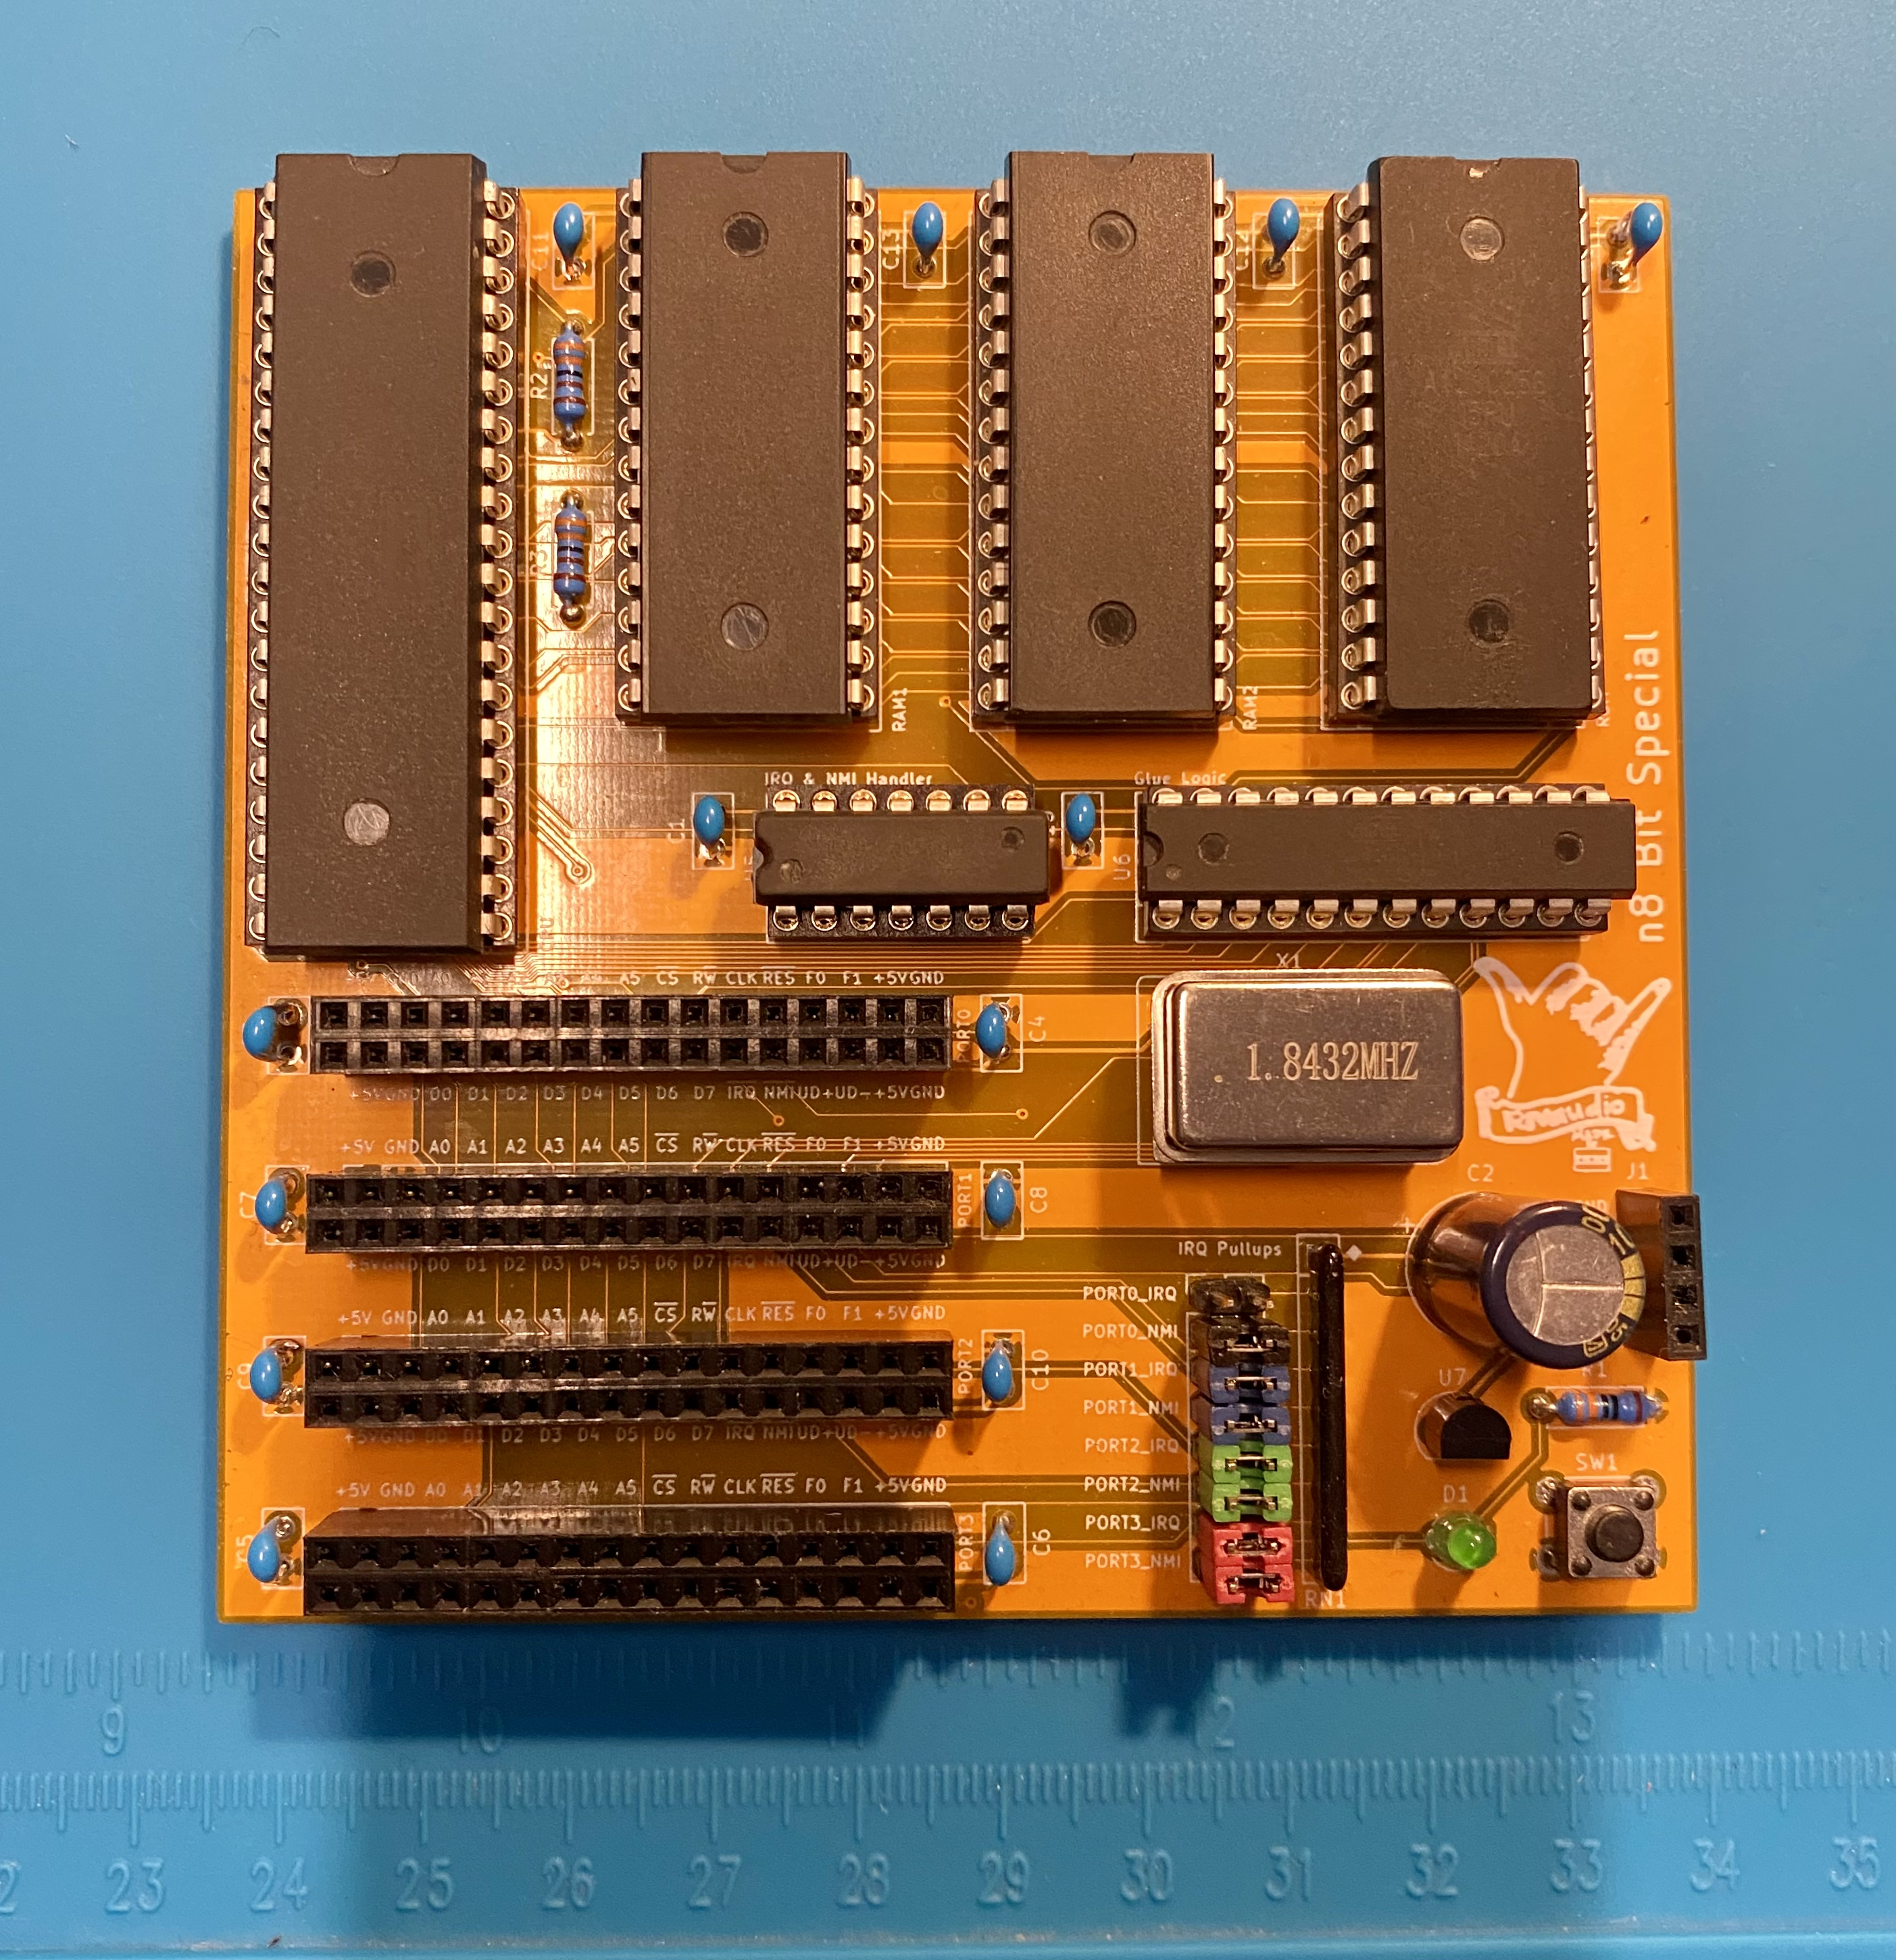 nate bit microcomputer, version 1